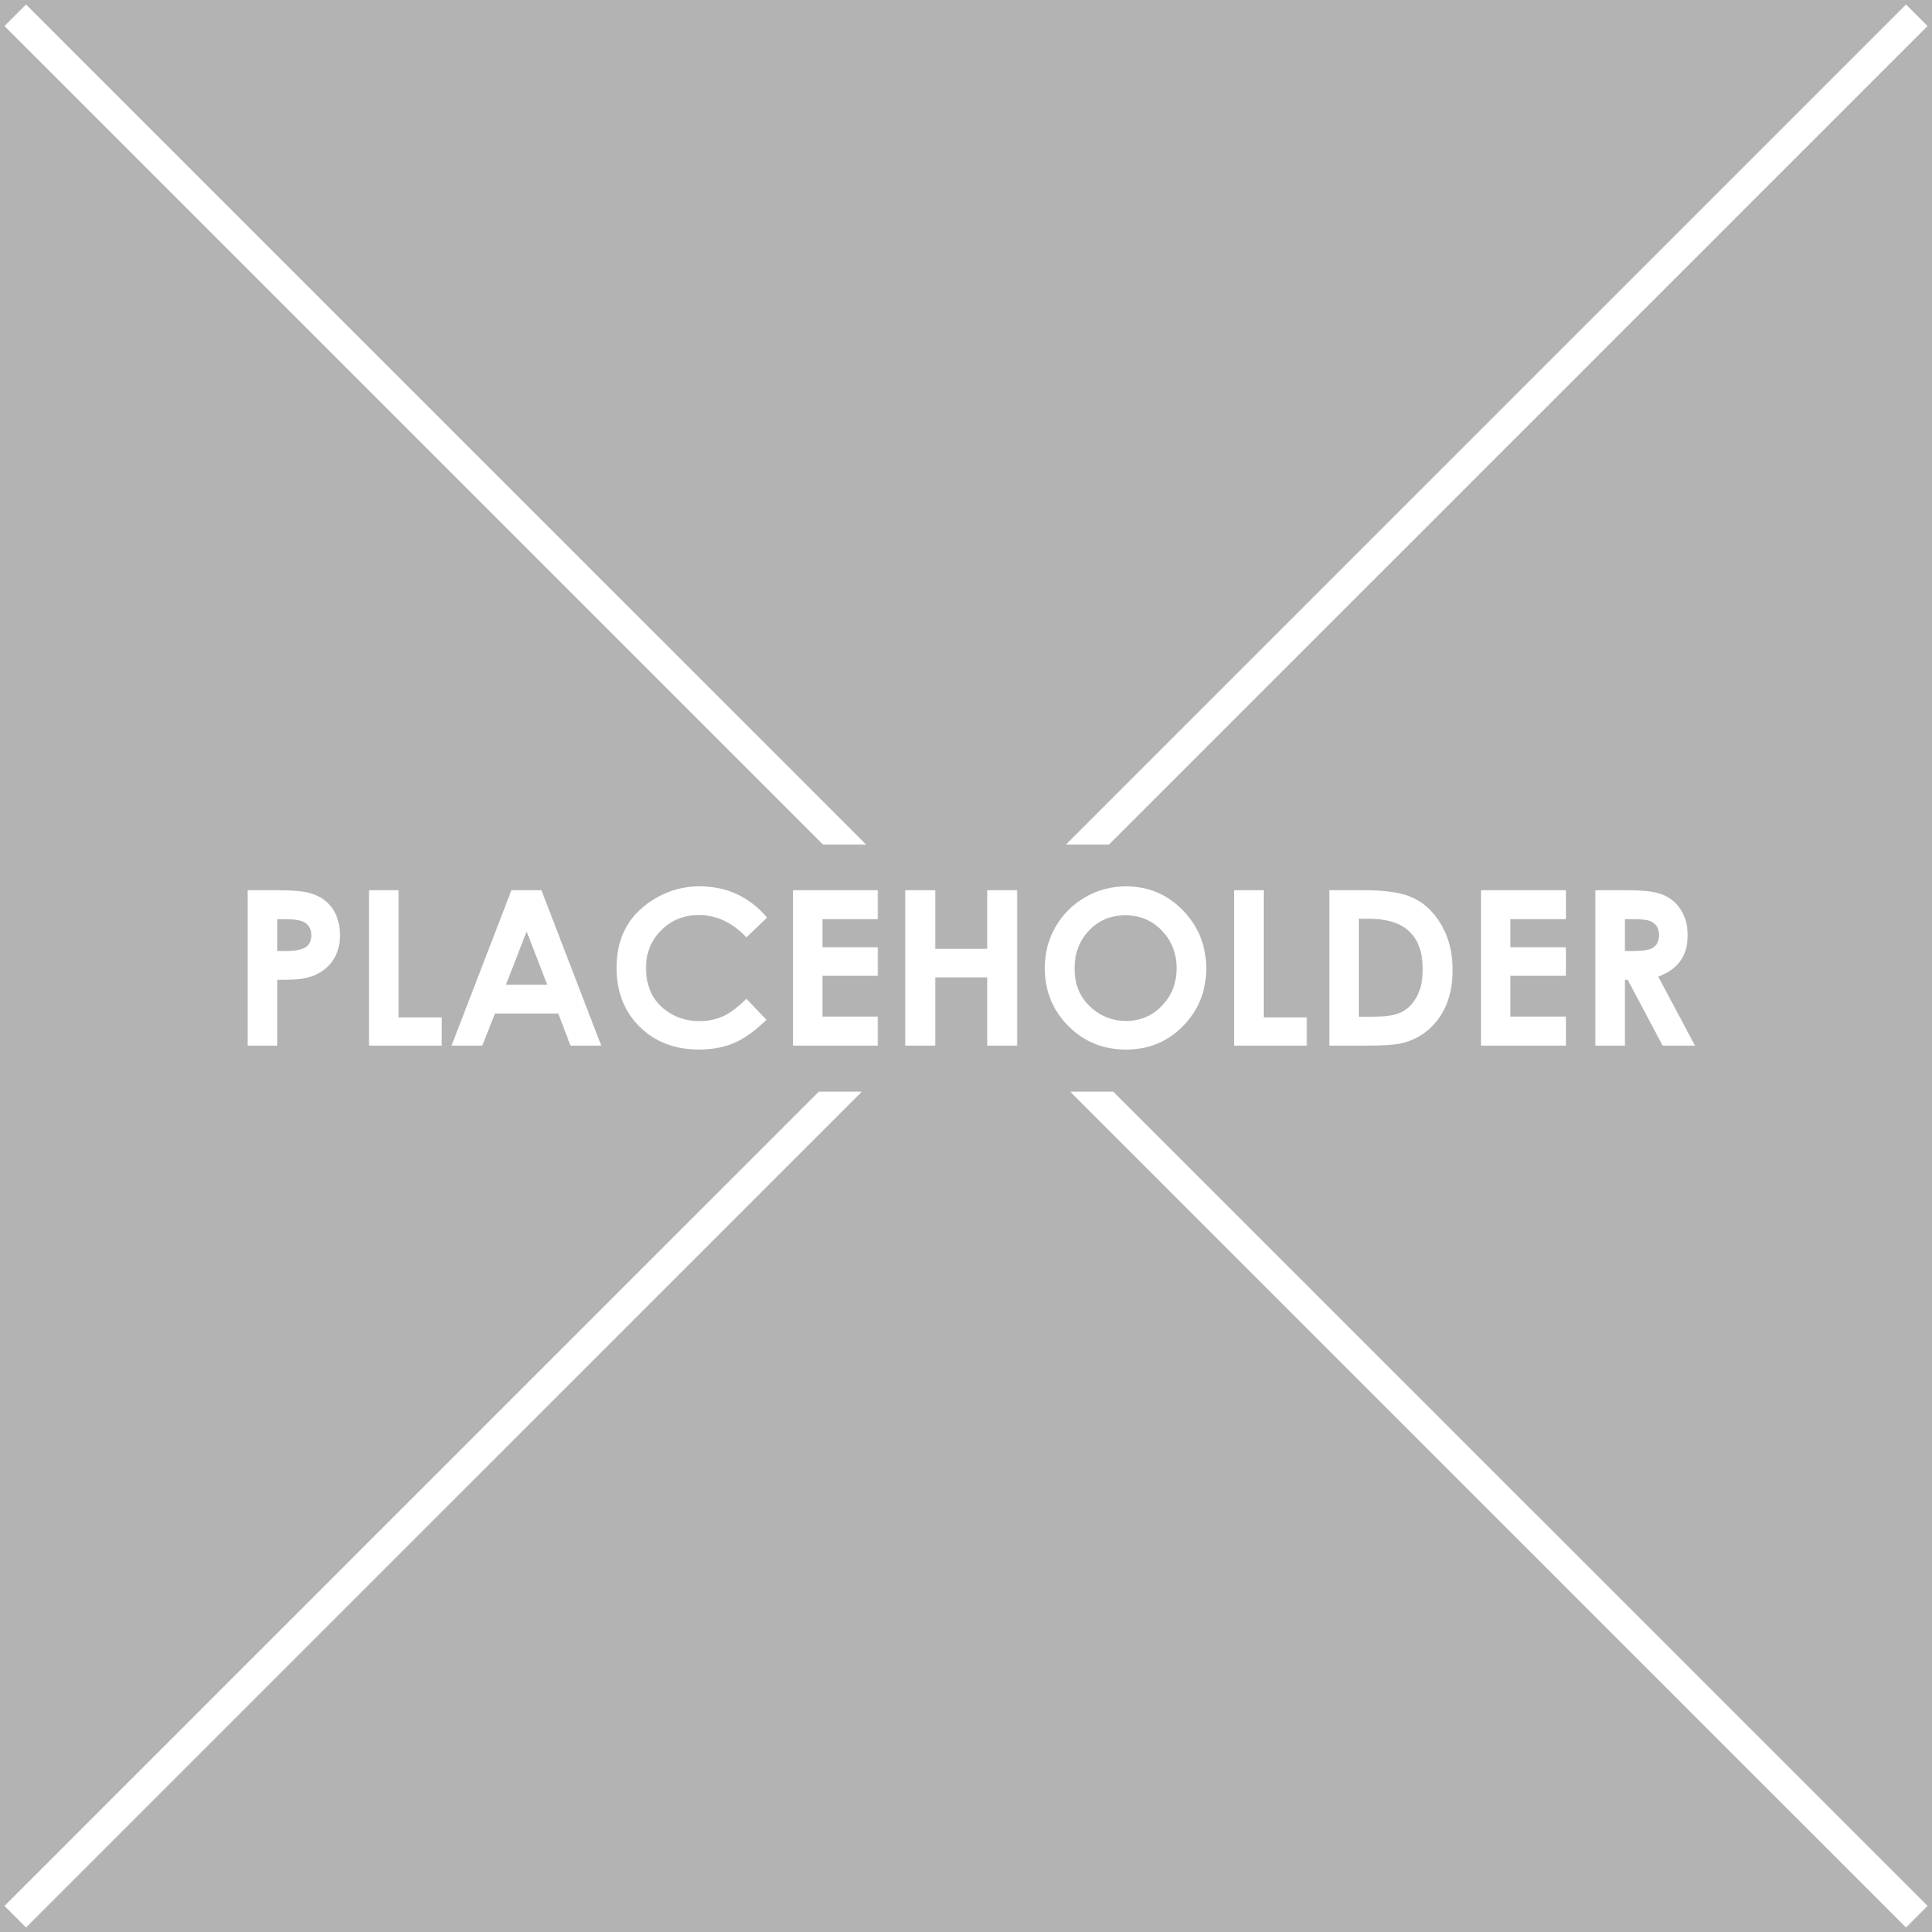 Placeholder copy 3.png